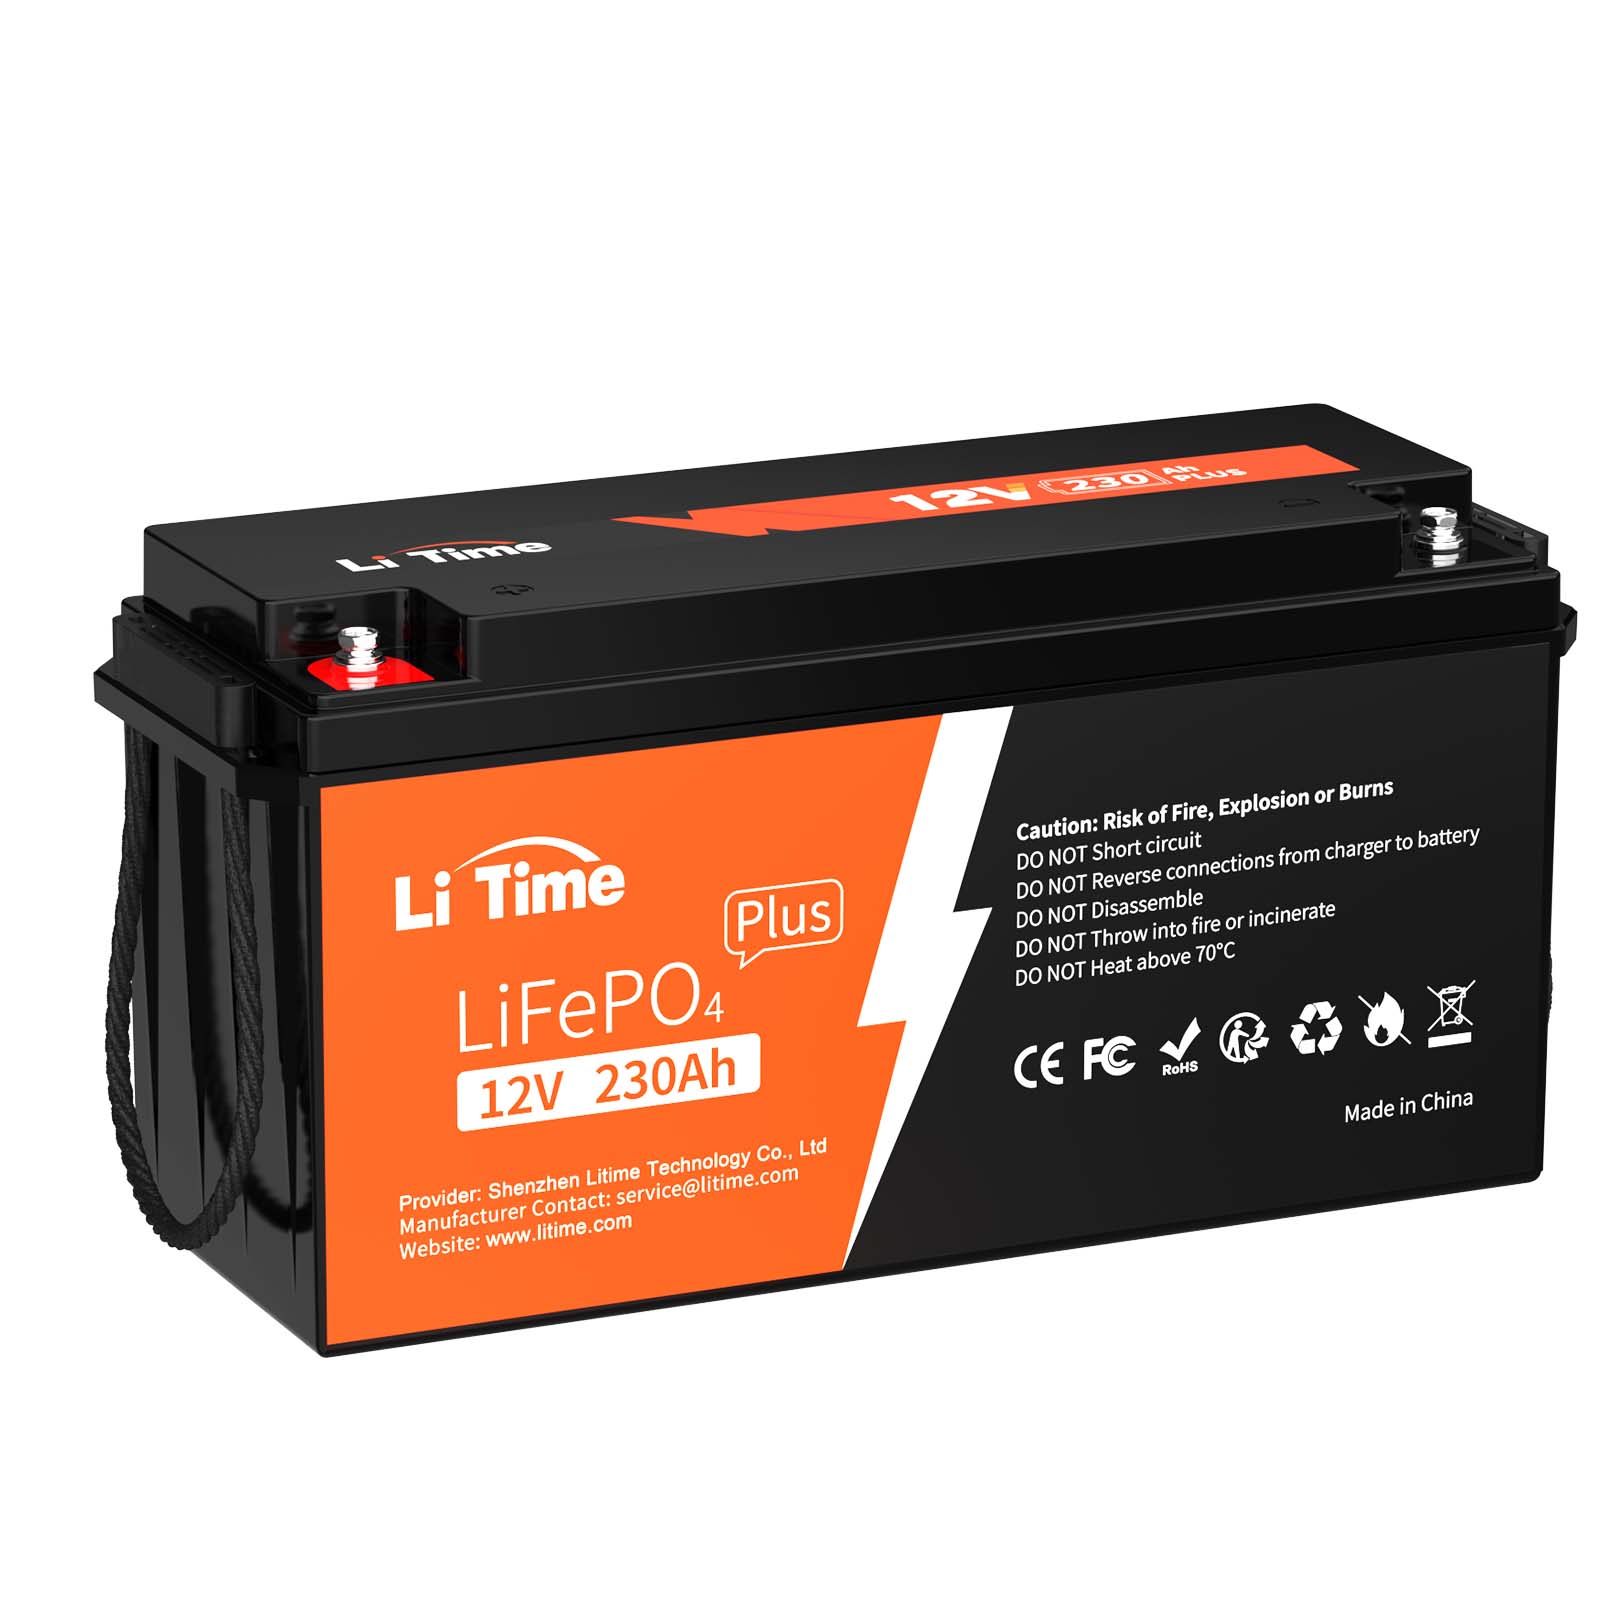 LiTime 12V230Ah Plus リン酸鉄リチウムイオンバッテリー